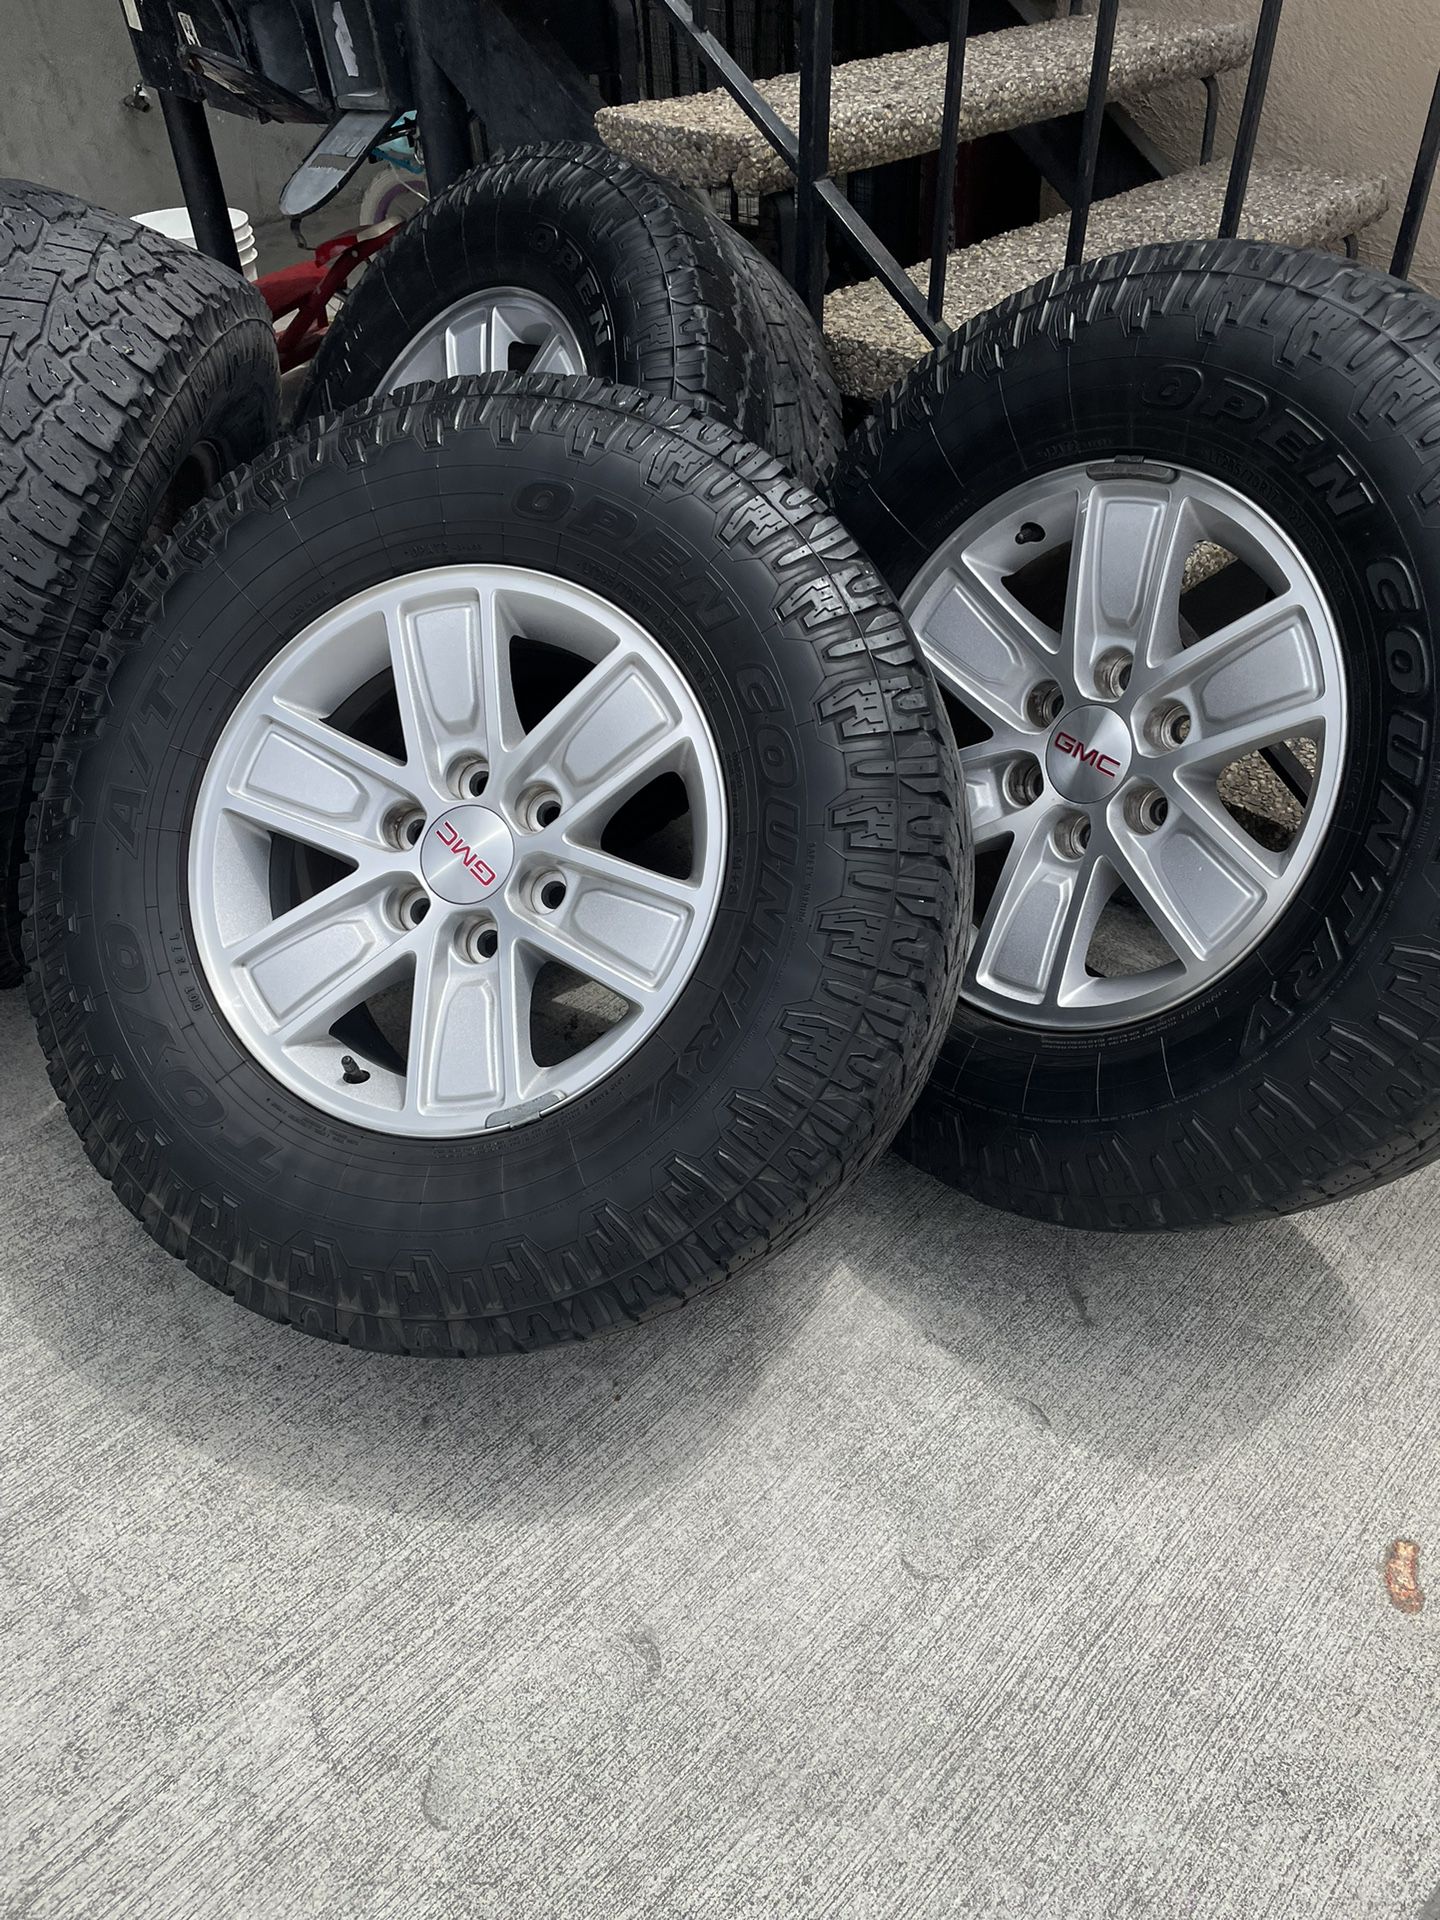 GMC Chevy Wheels 